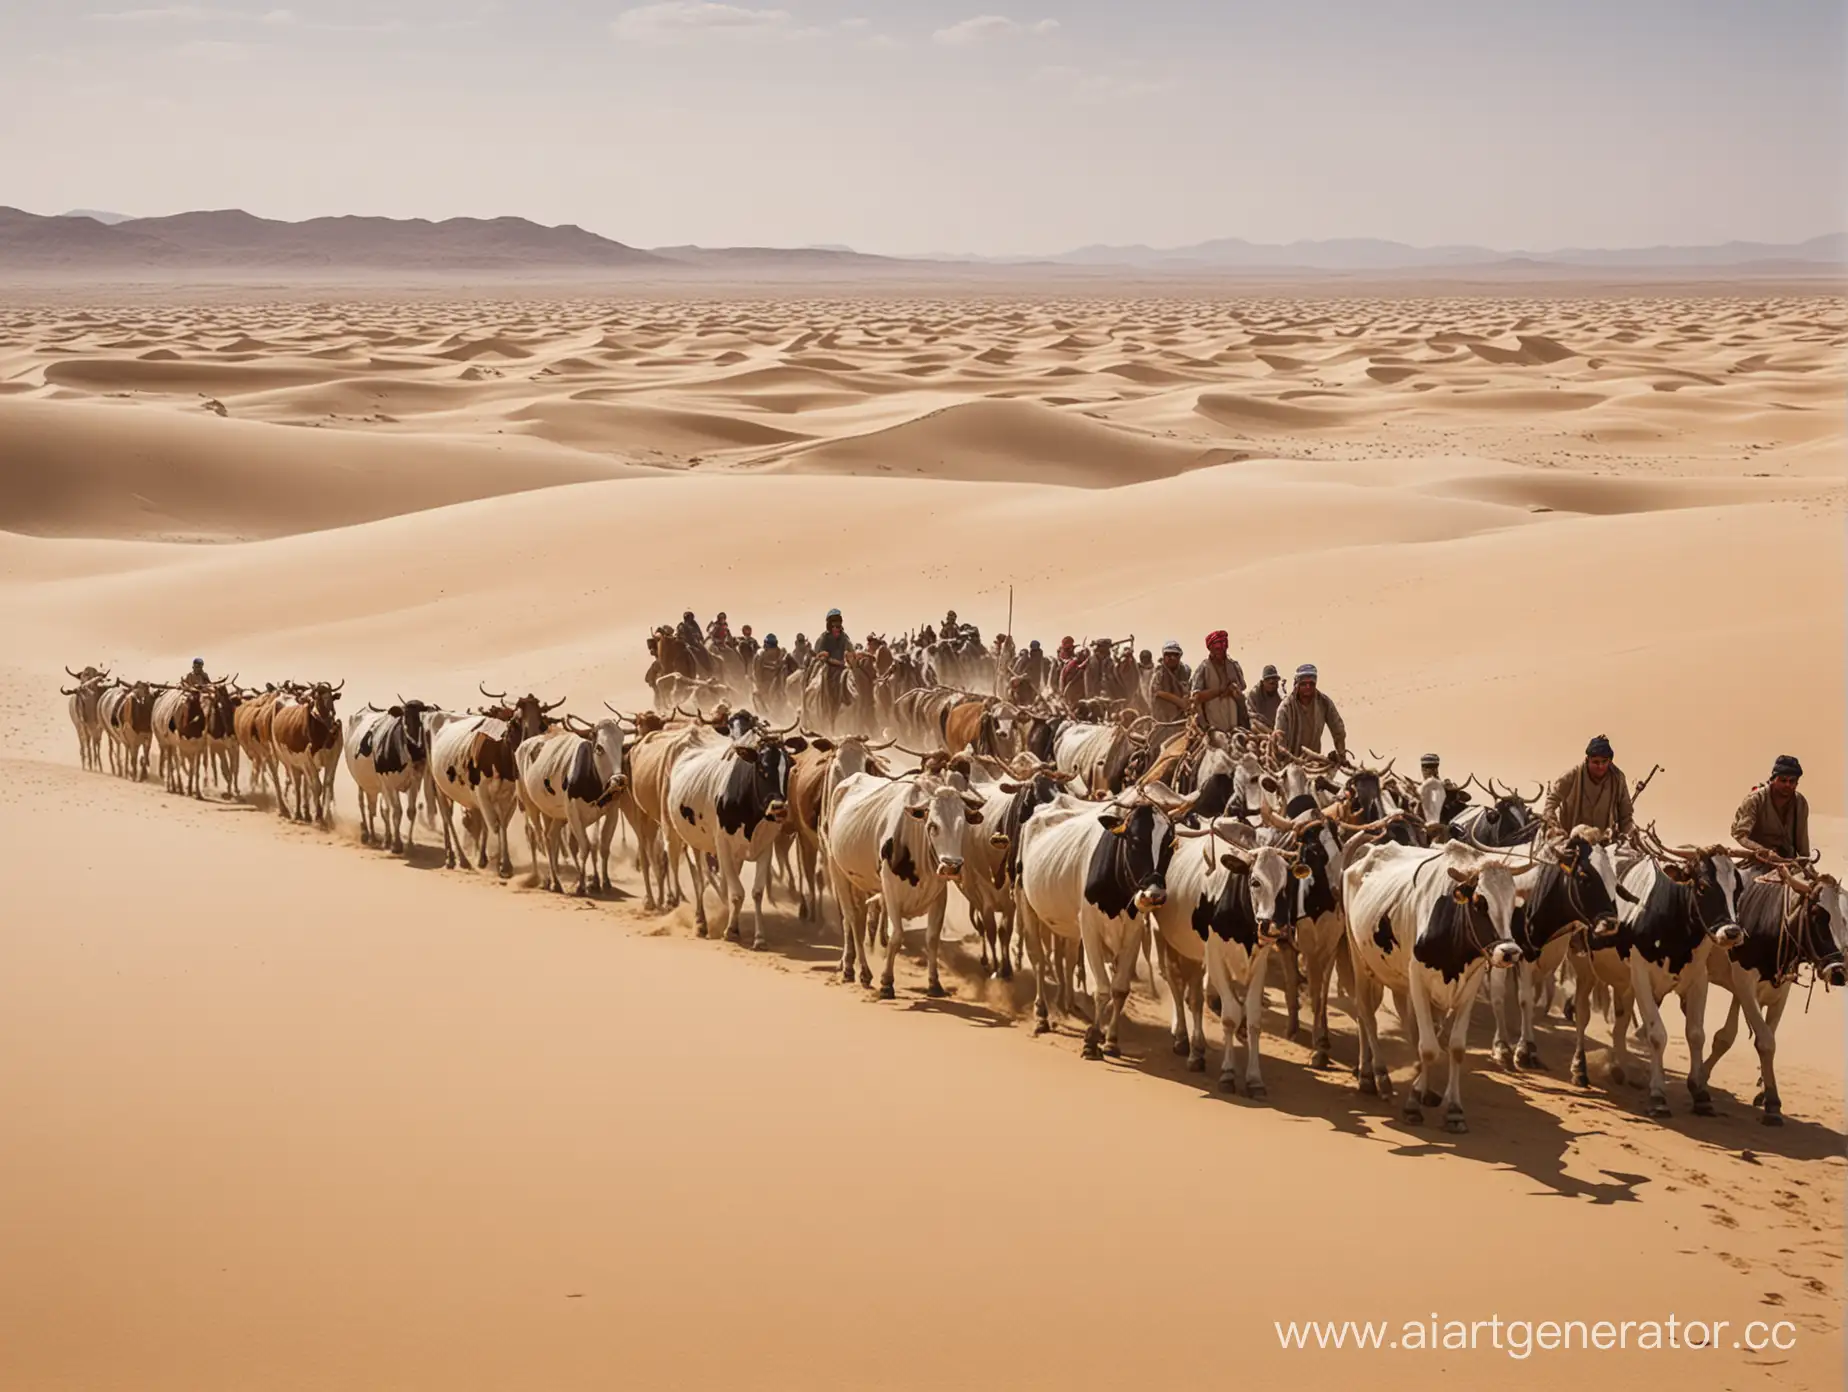 Caravan-of-Cows-Journeying-Through-Desert-Dunes-Amidst-Ambush